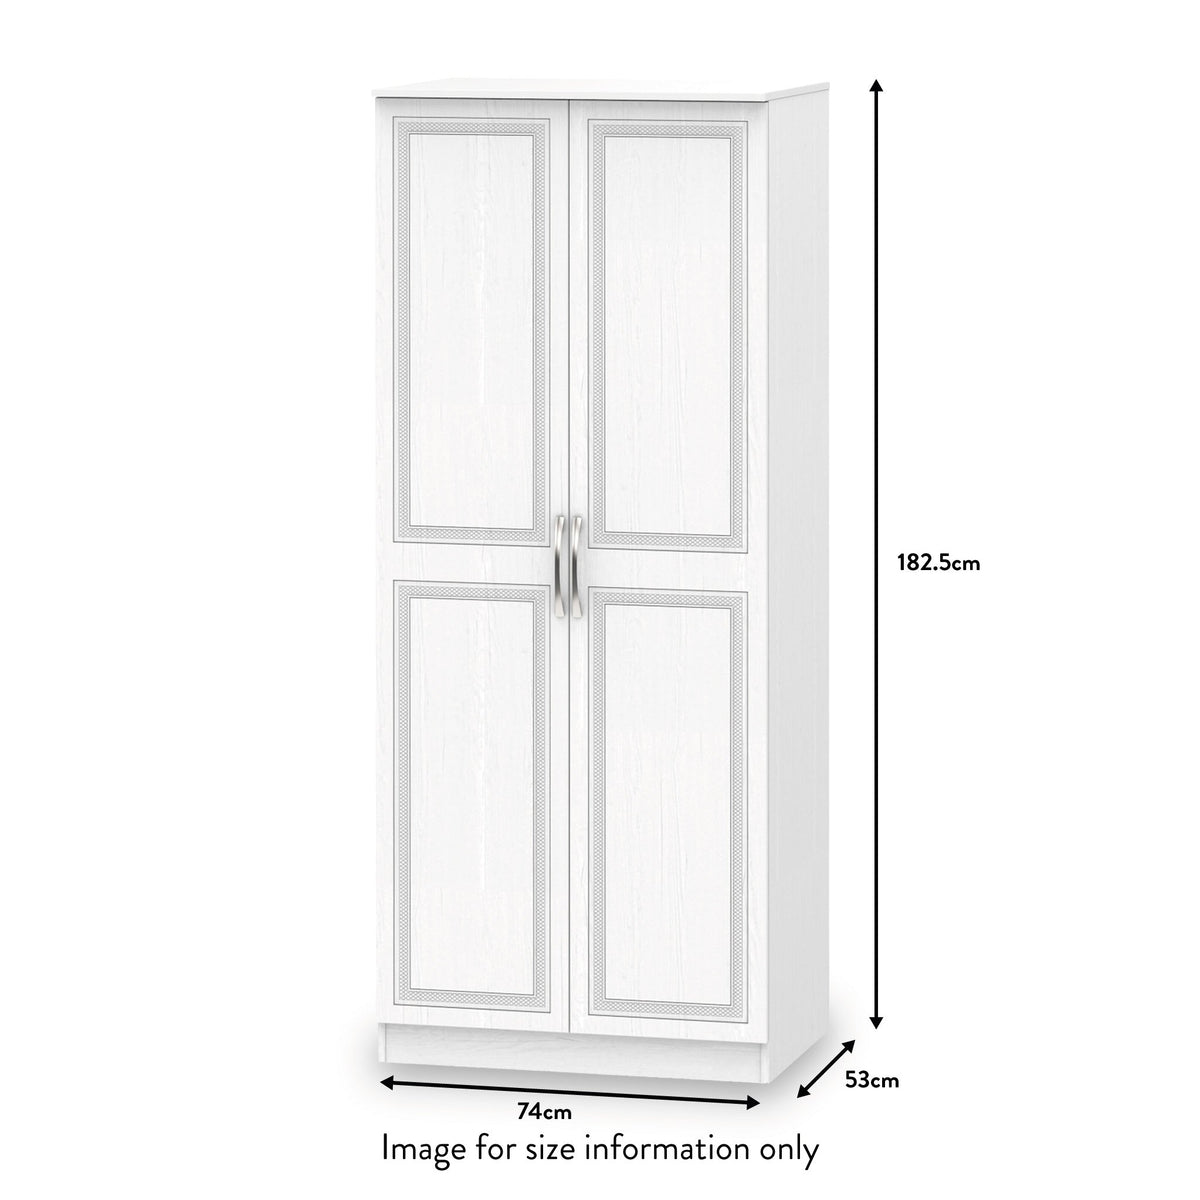 Killgarth White 2 Door Double Wardrobe dimensions